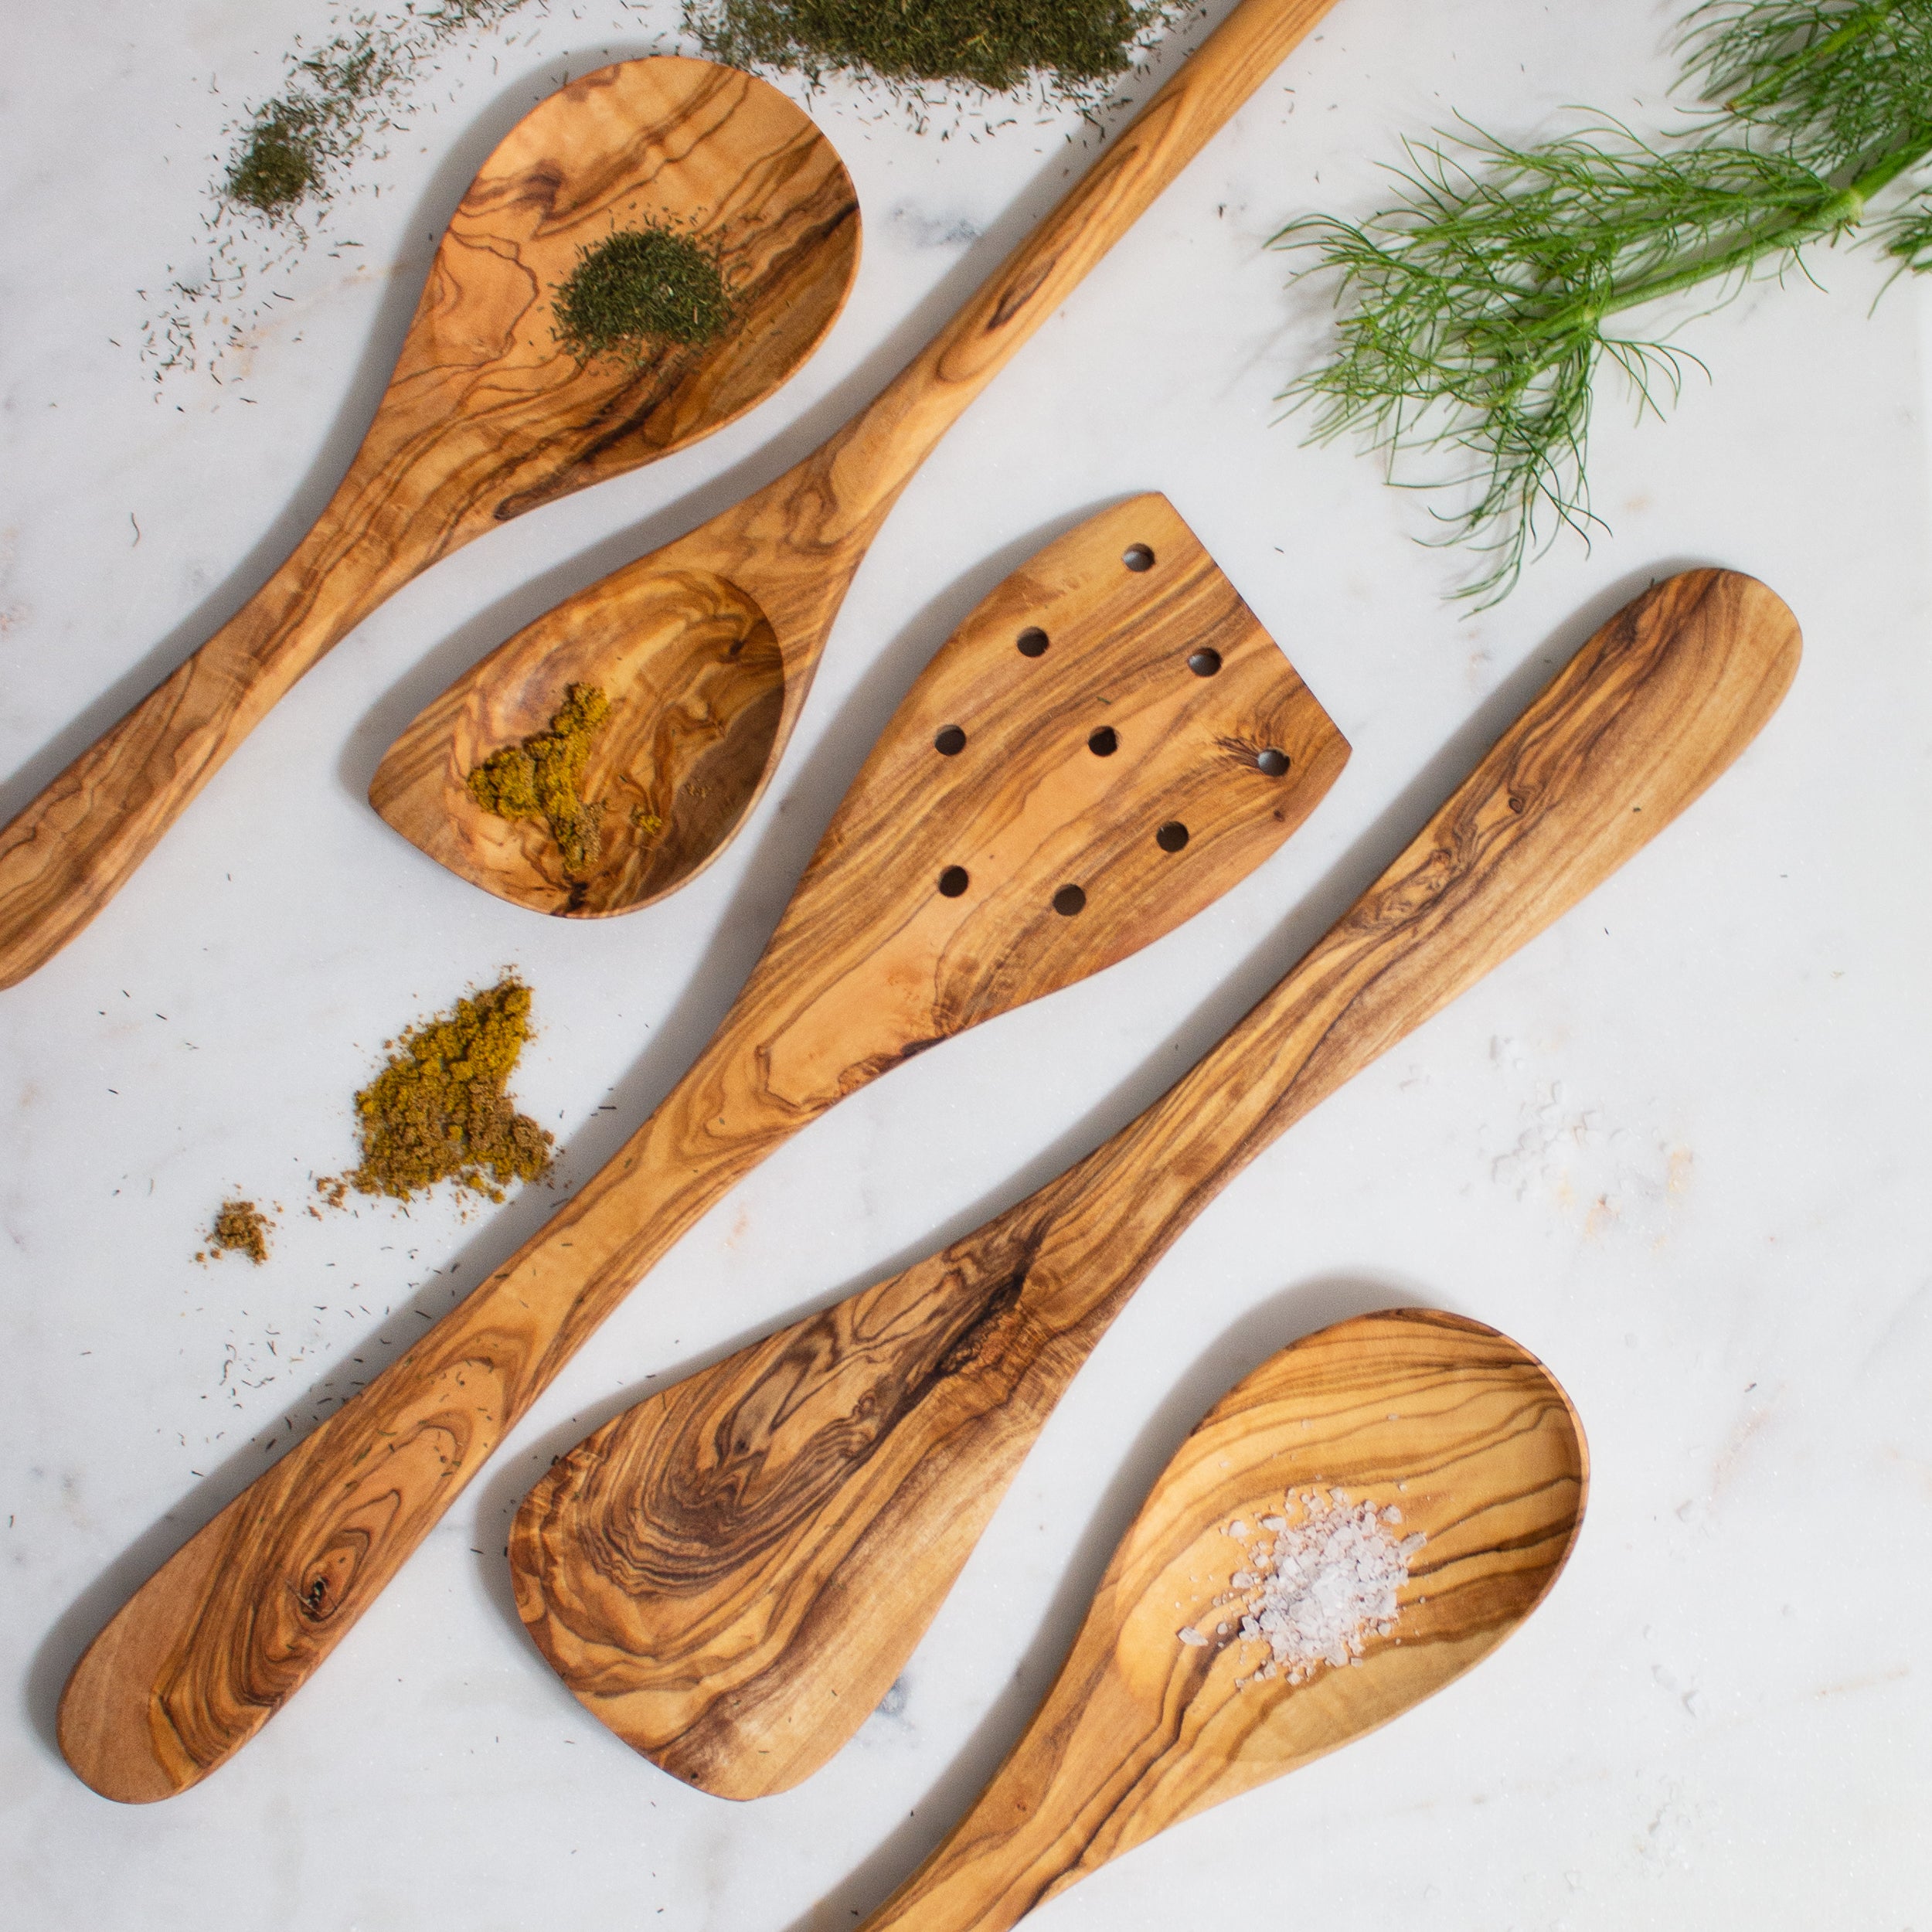 Olive Tree 4 Piece Handmade Wooden Kitchen Set, Wooden Spoon, Fork